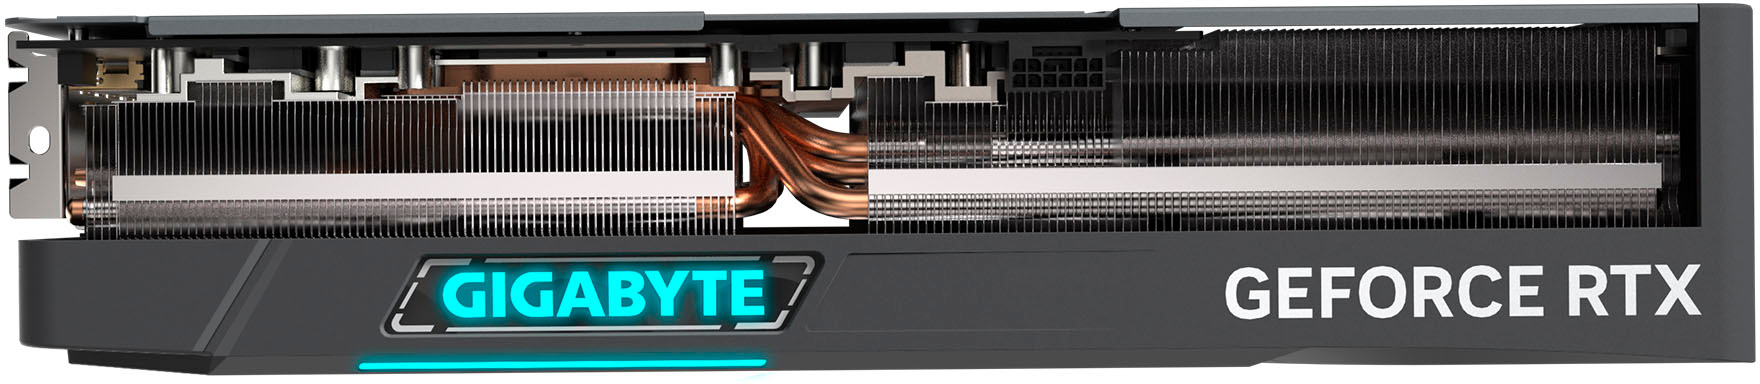 Gigabyte GeForce RTX 4080 16GB EAGLE Graphics GV-N4080EAGLE-16GD